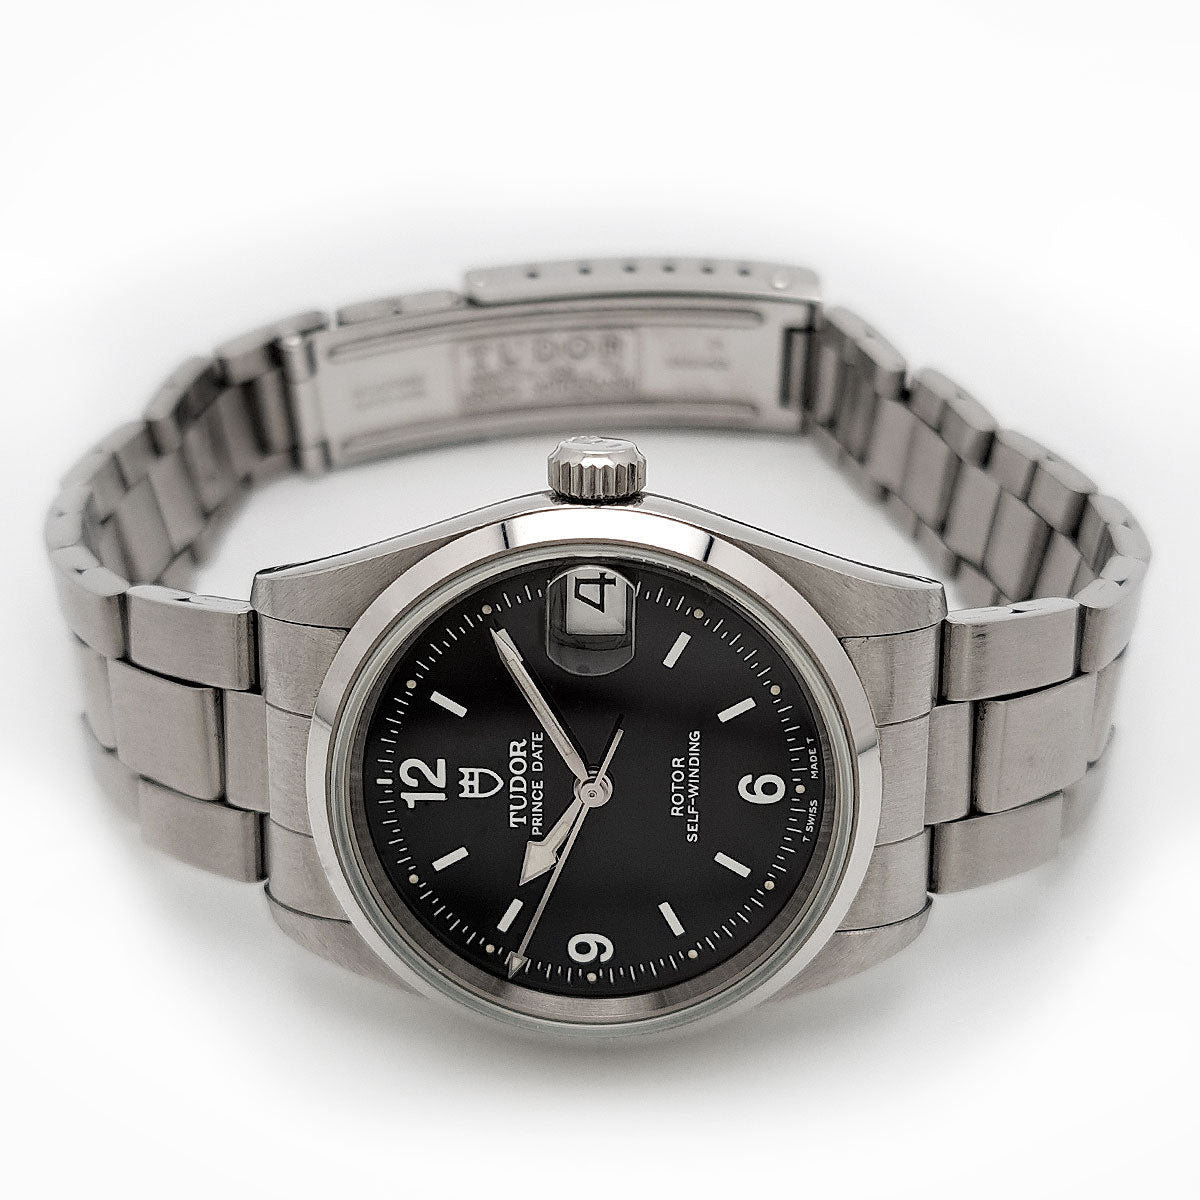 Automatic Prince Date Wrist Watch 72000